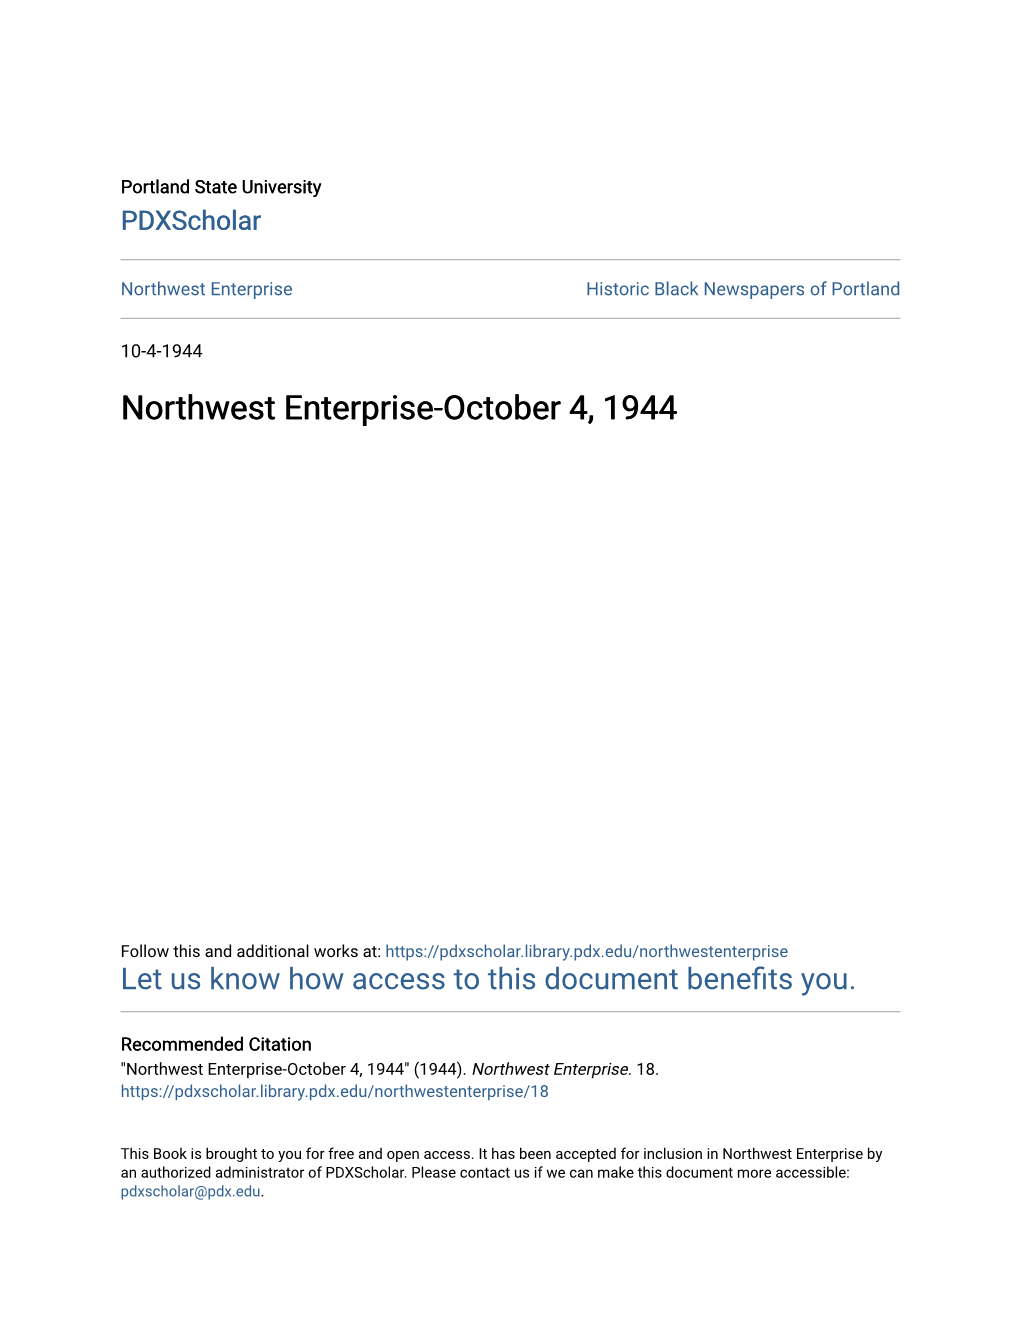 Northwest Enterprise-October 4, 1944